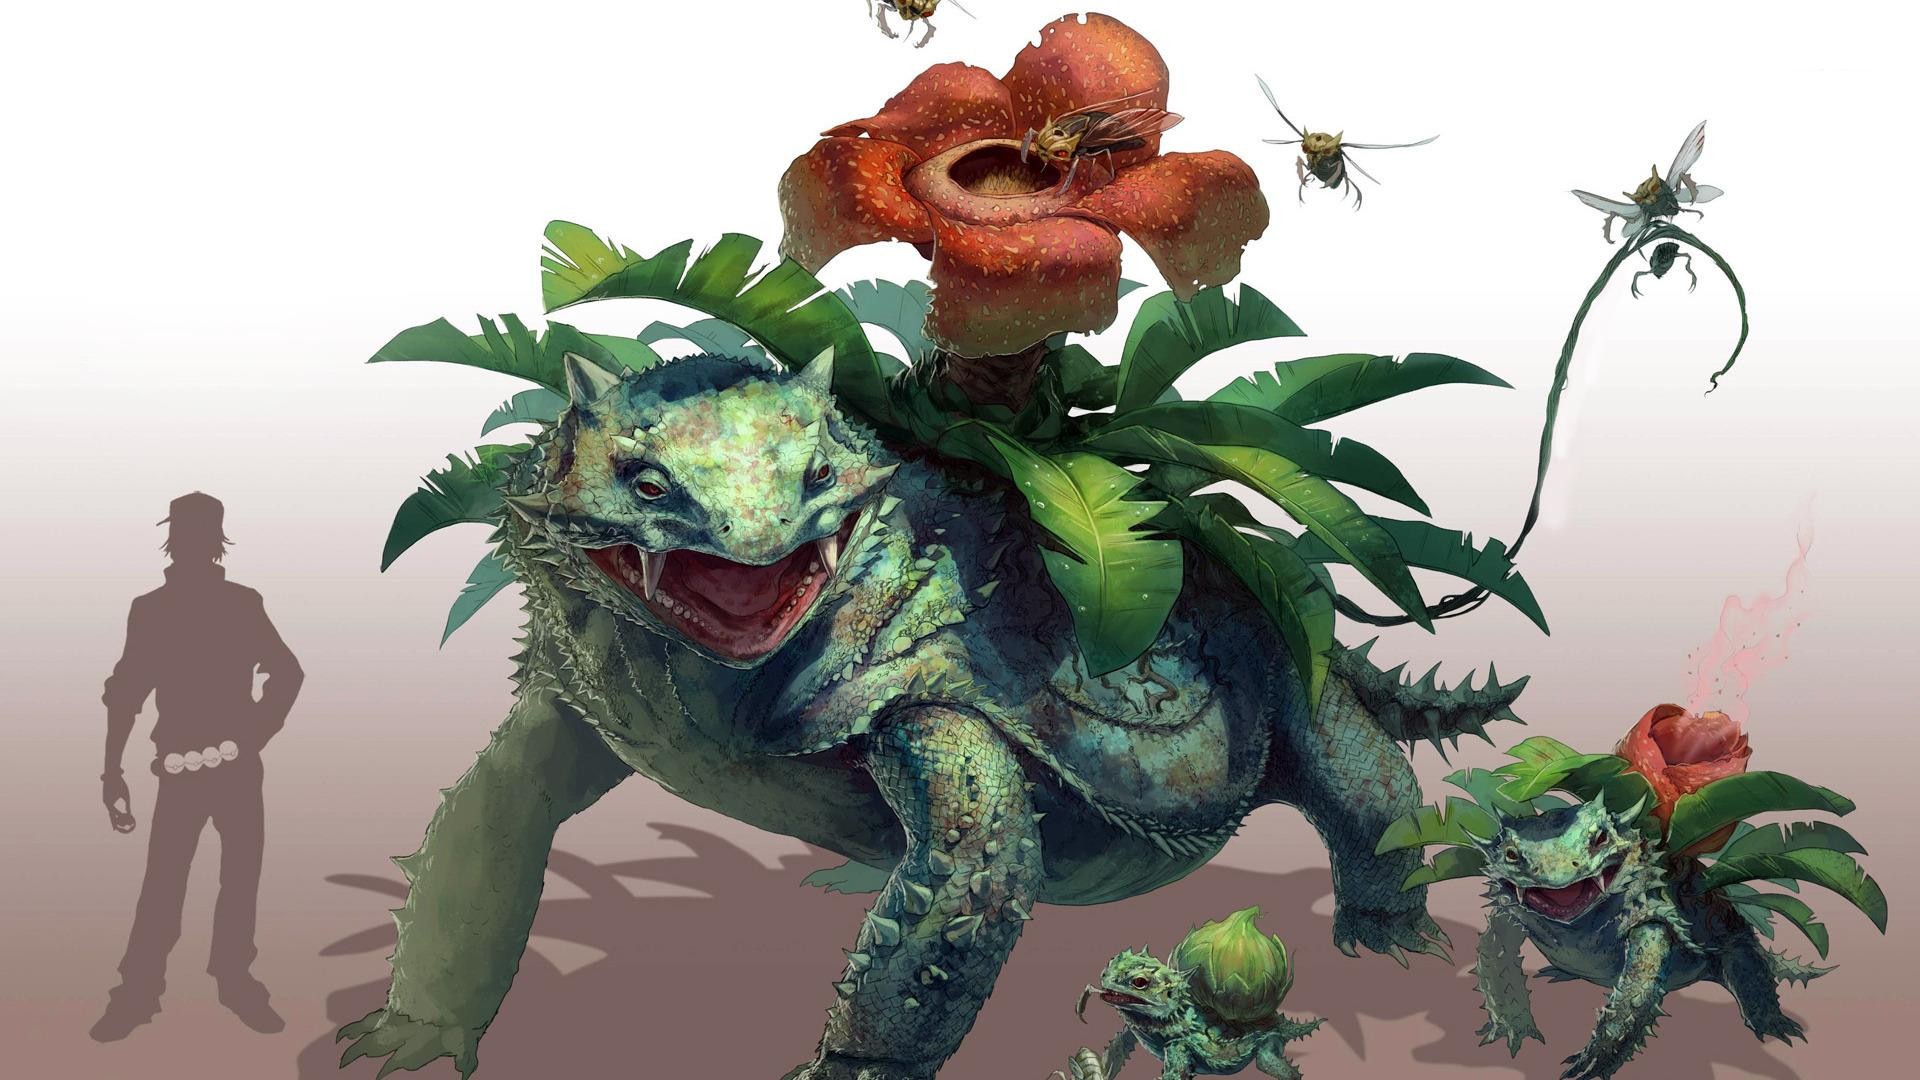 bulbasaur 벽지,만화 영화,생기,소설 속의 인물,삽화,식물